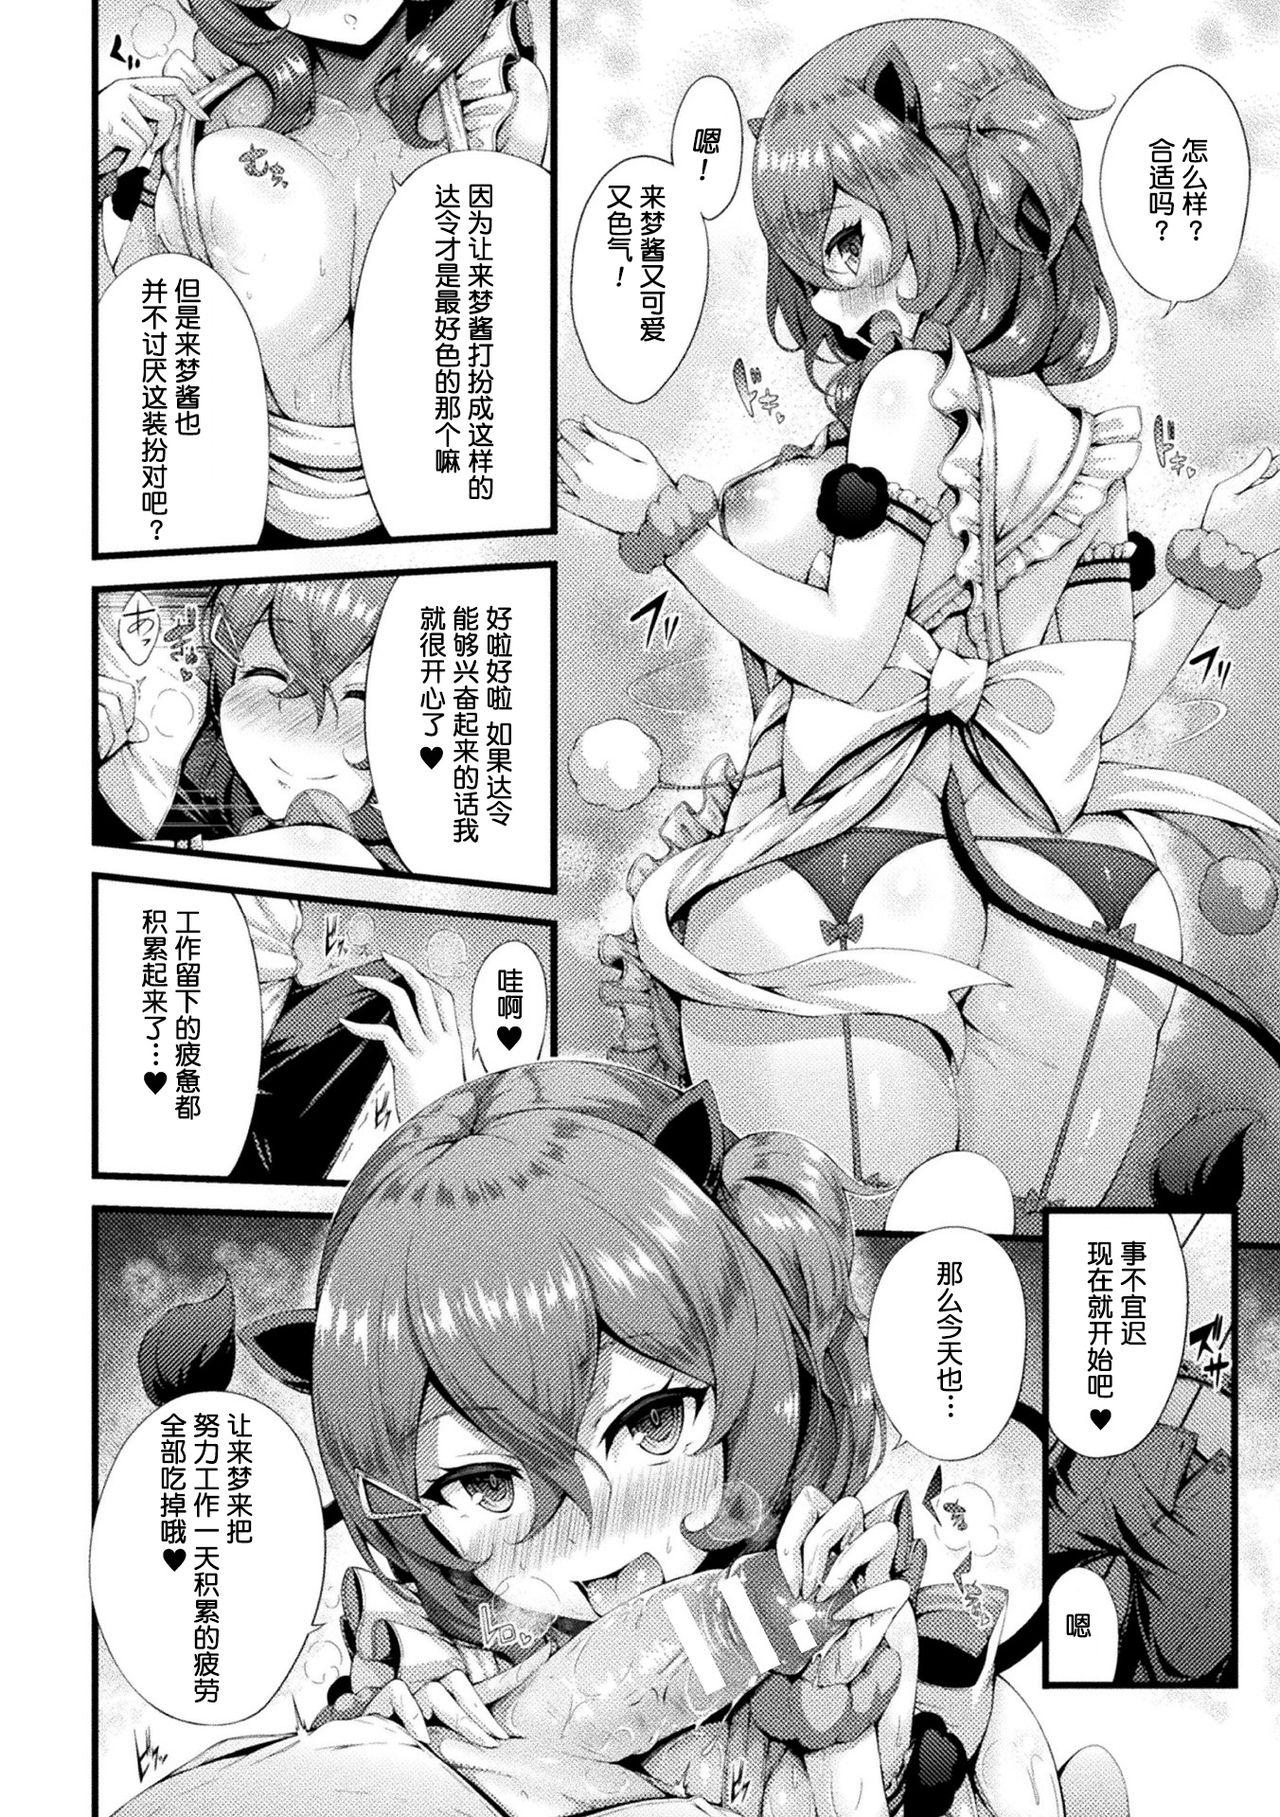 Yanks Featured Yumekui Lovers Tied - Page 3